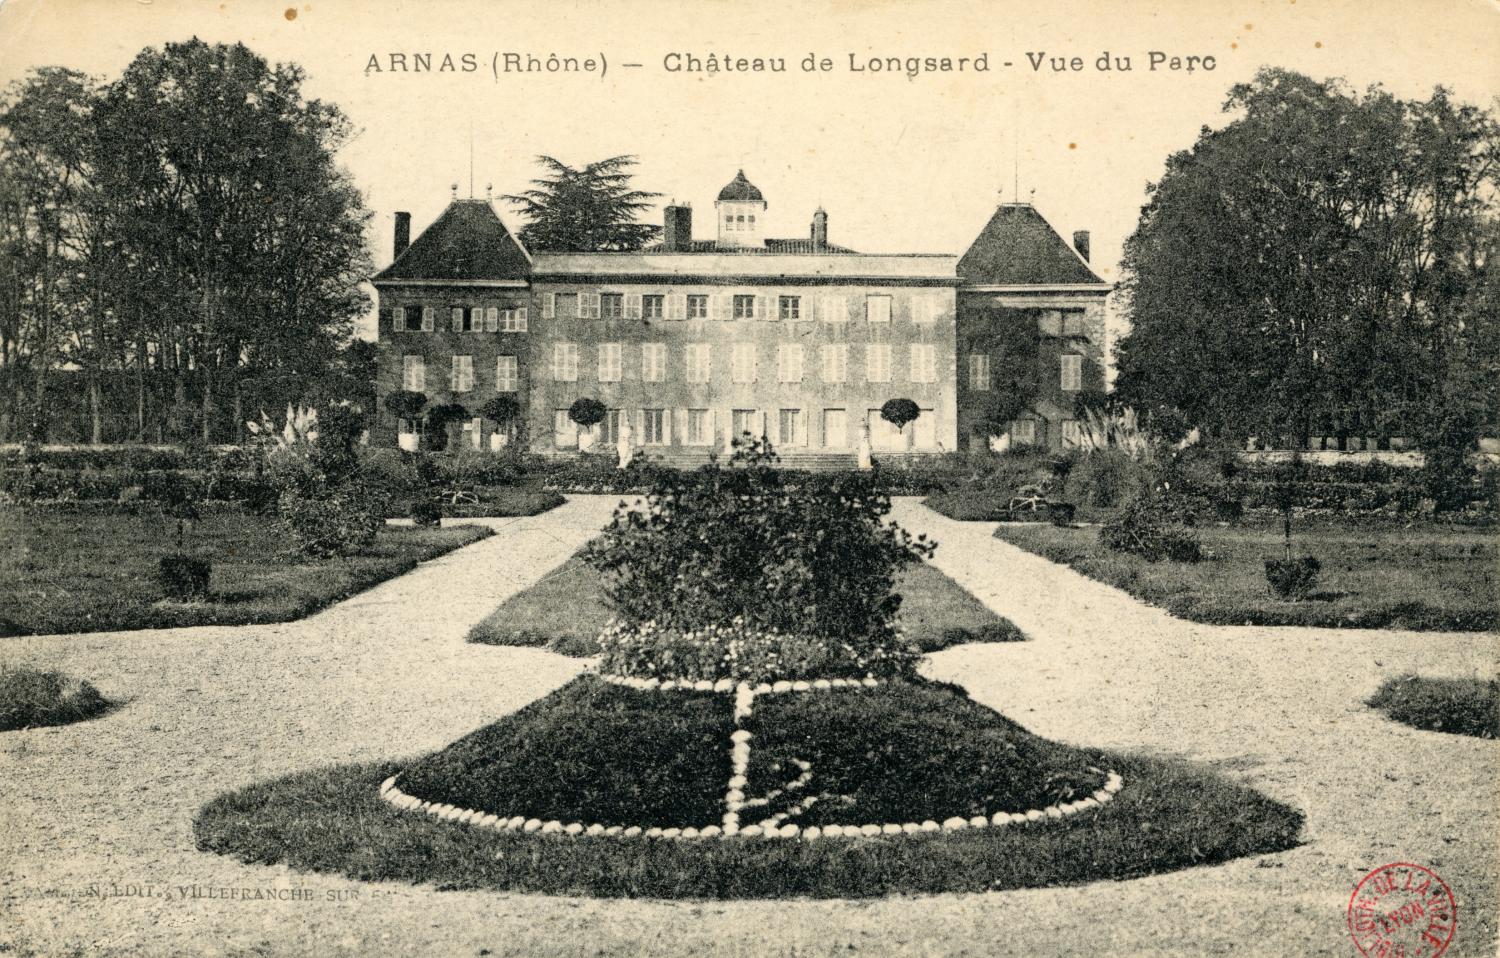 Arnas (Rhône). - Château de Longsard. - Vue du parc